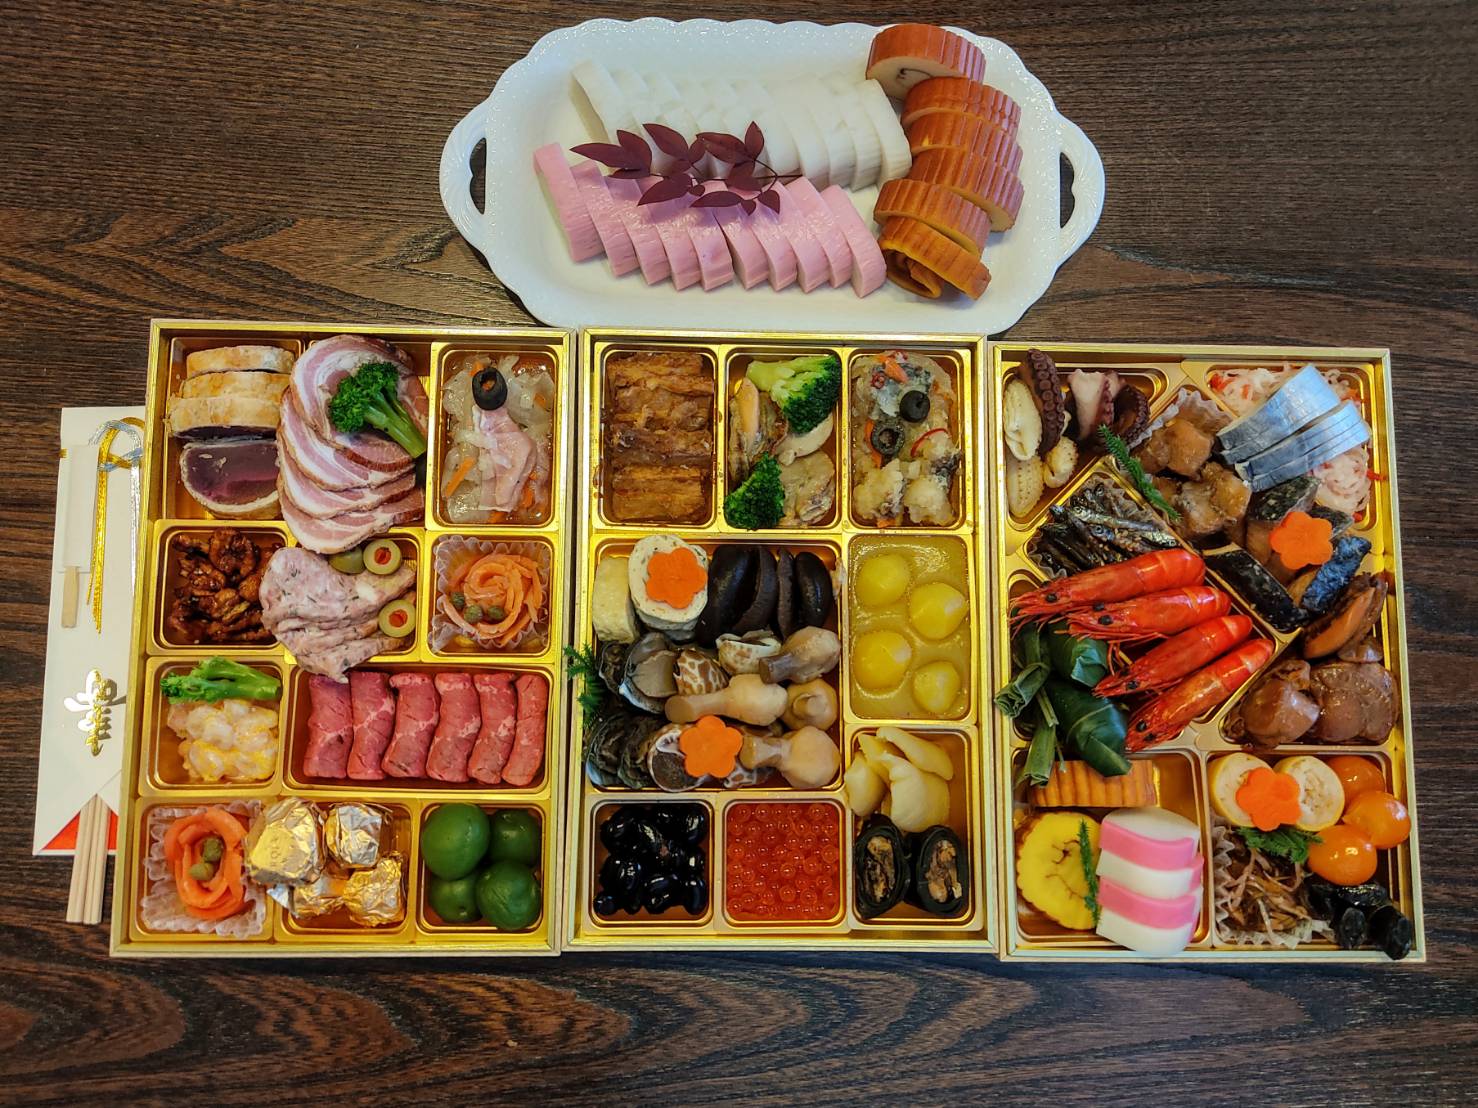 Japanese new year food, osechi ryori in boxes